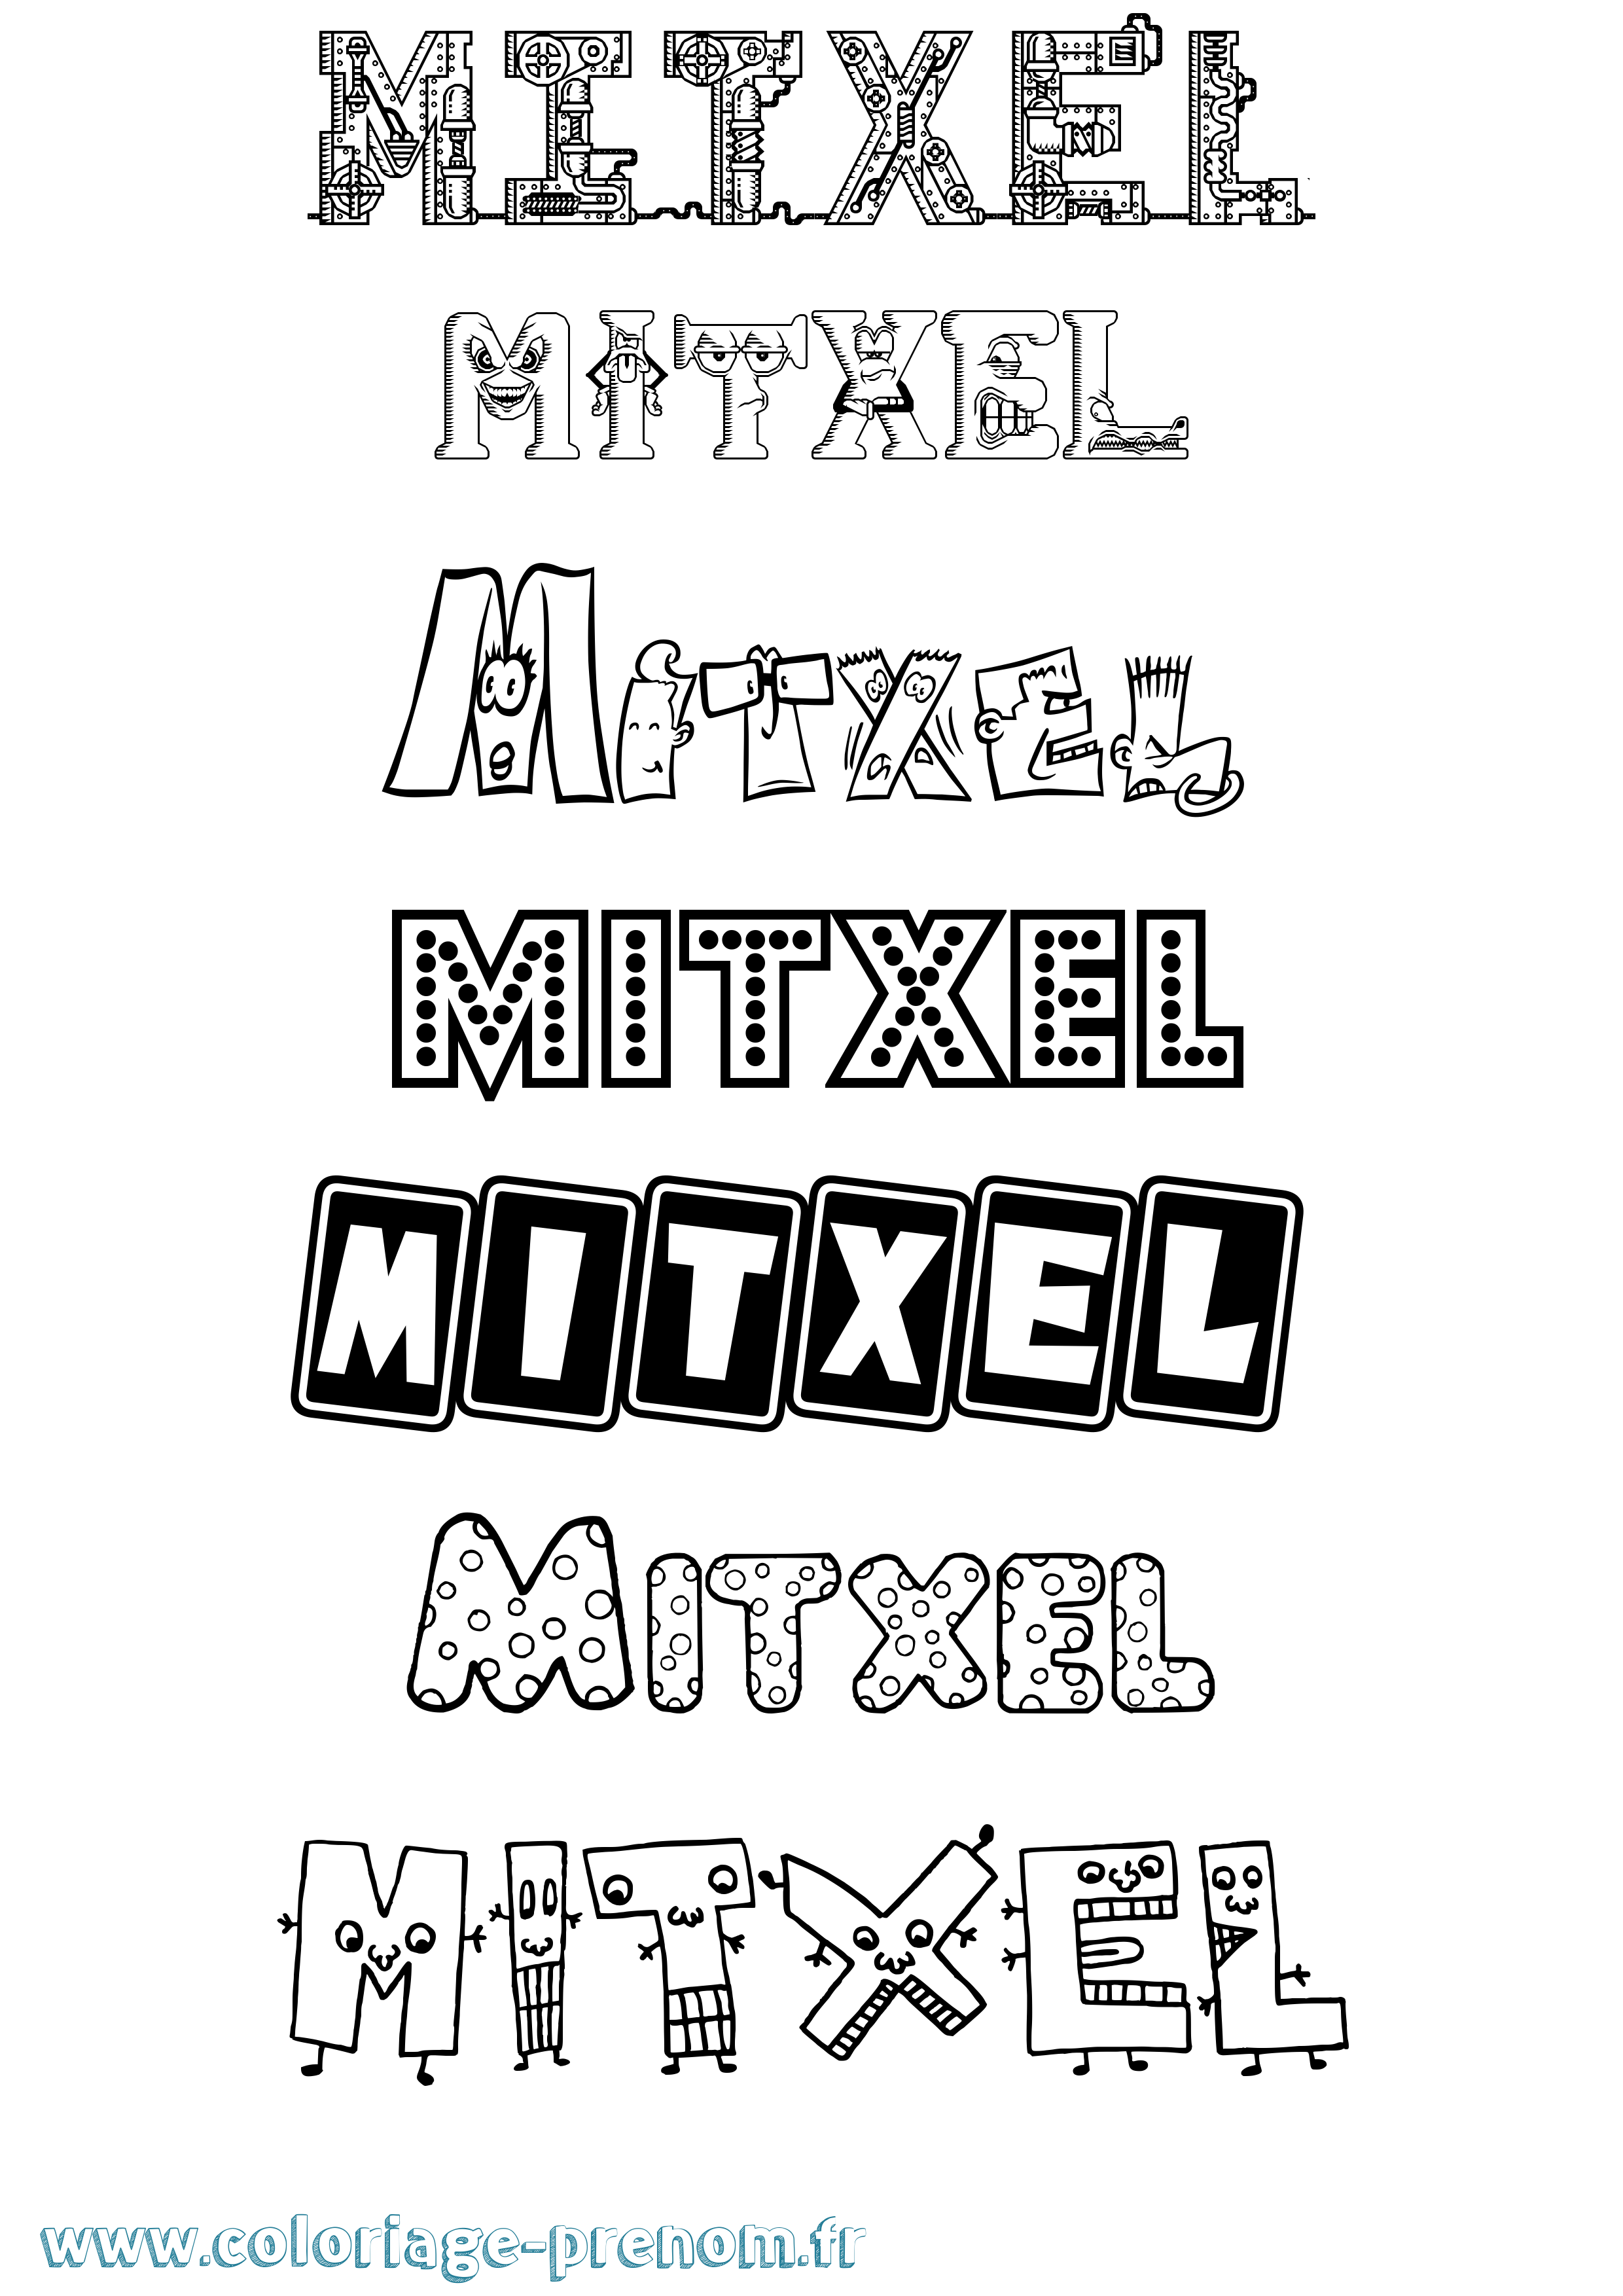 Coloriage prénom Mitxel Fun